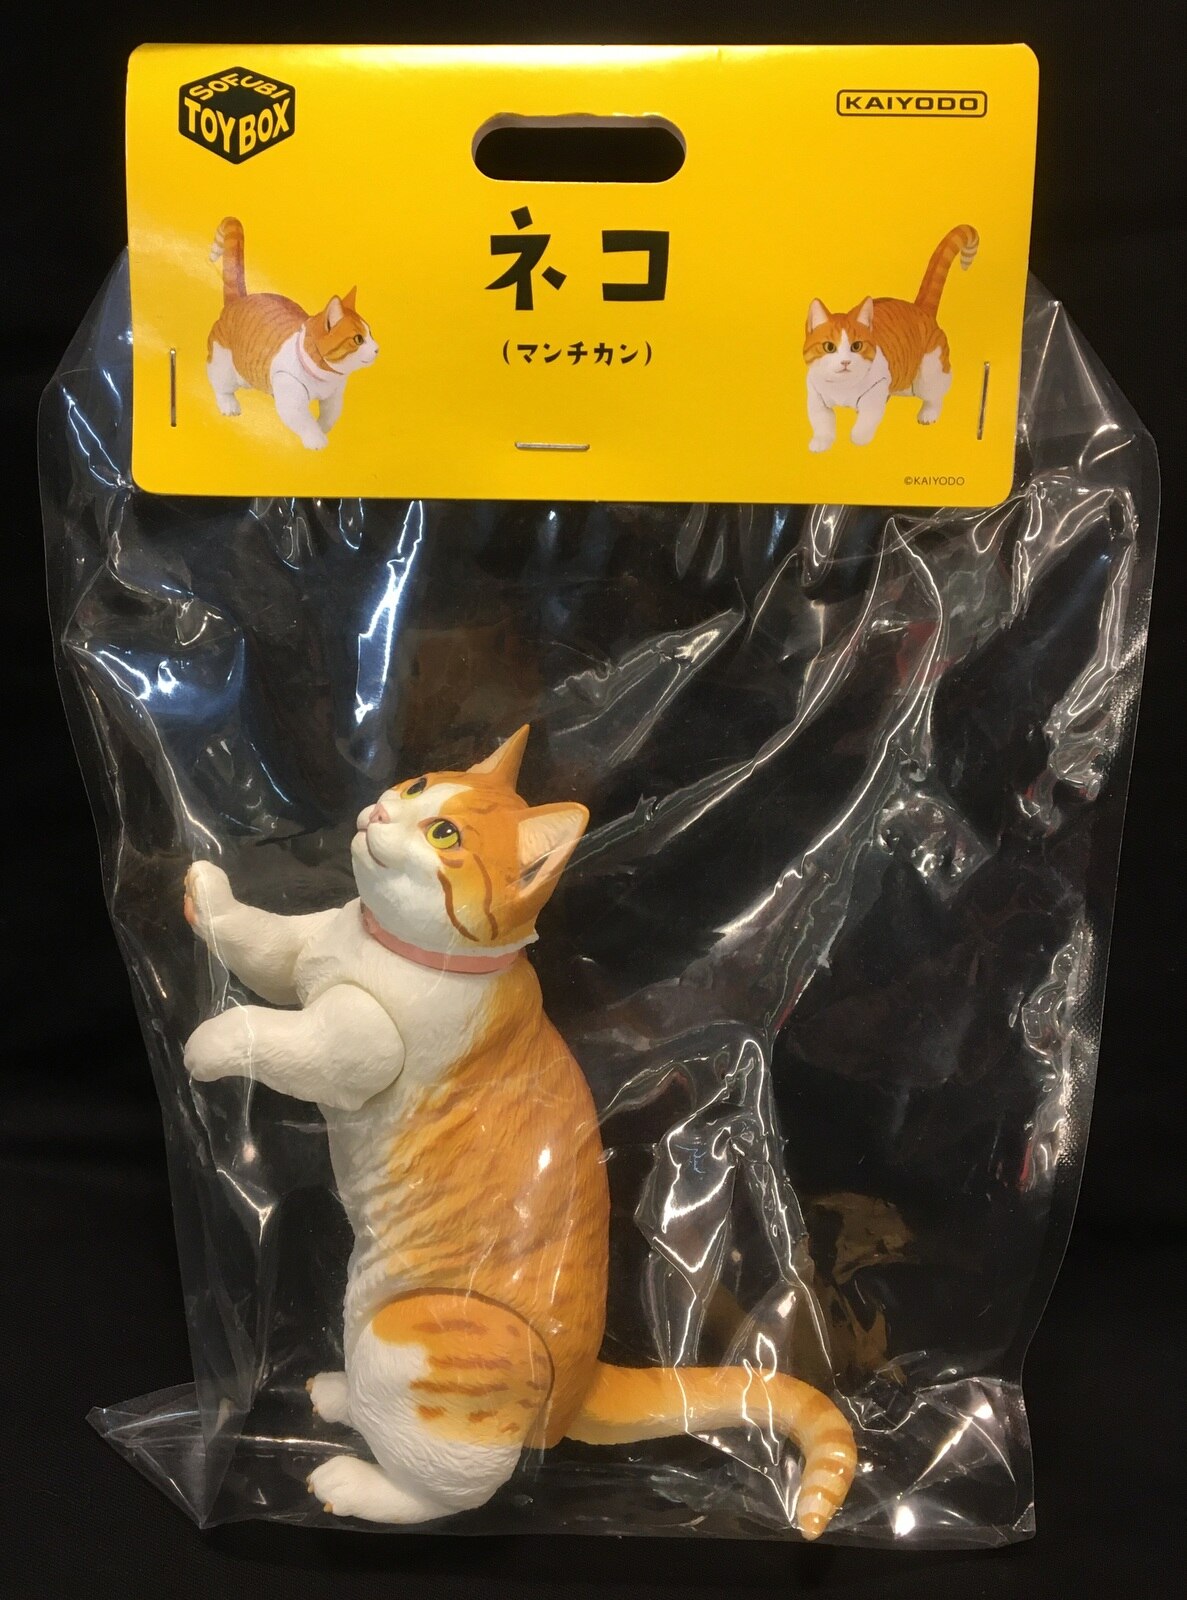 Kaiyodo MUNCHKIN Cat White 6.22in Sofubi Toy Box negora soft vinyl figure Japan